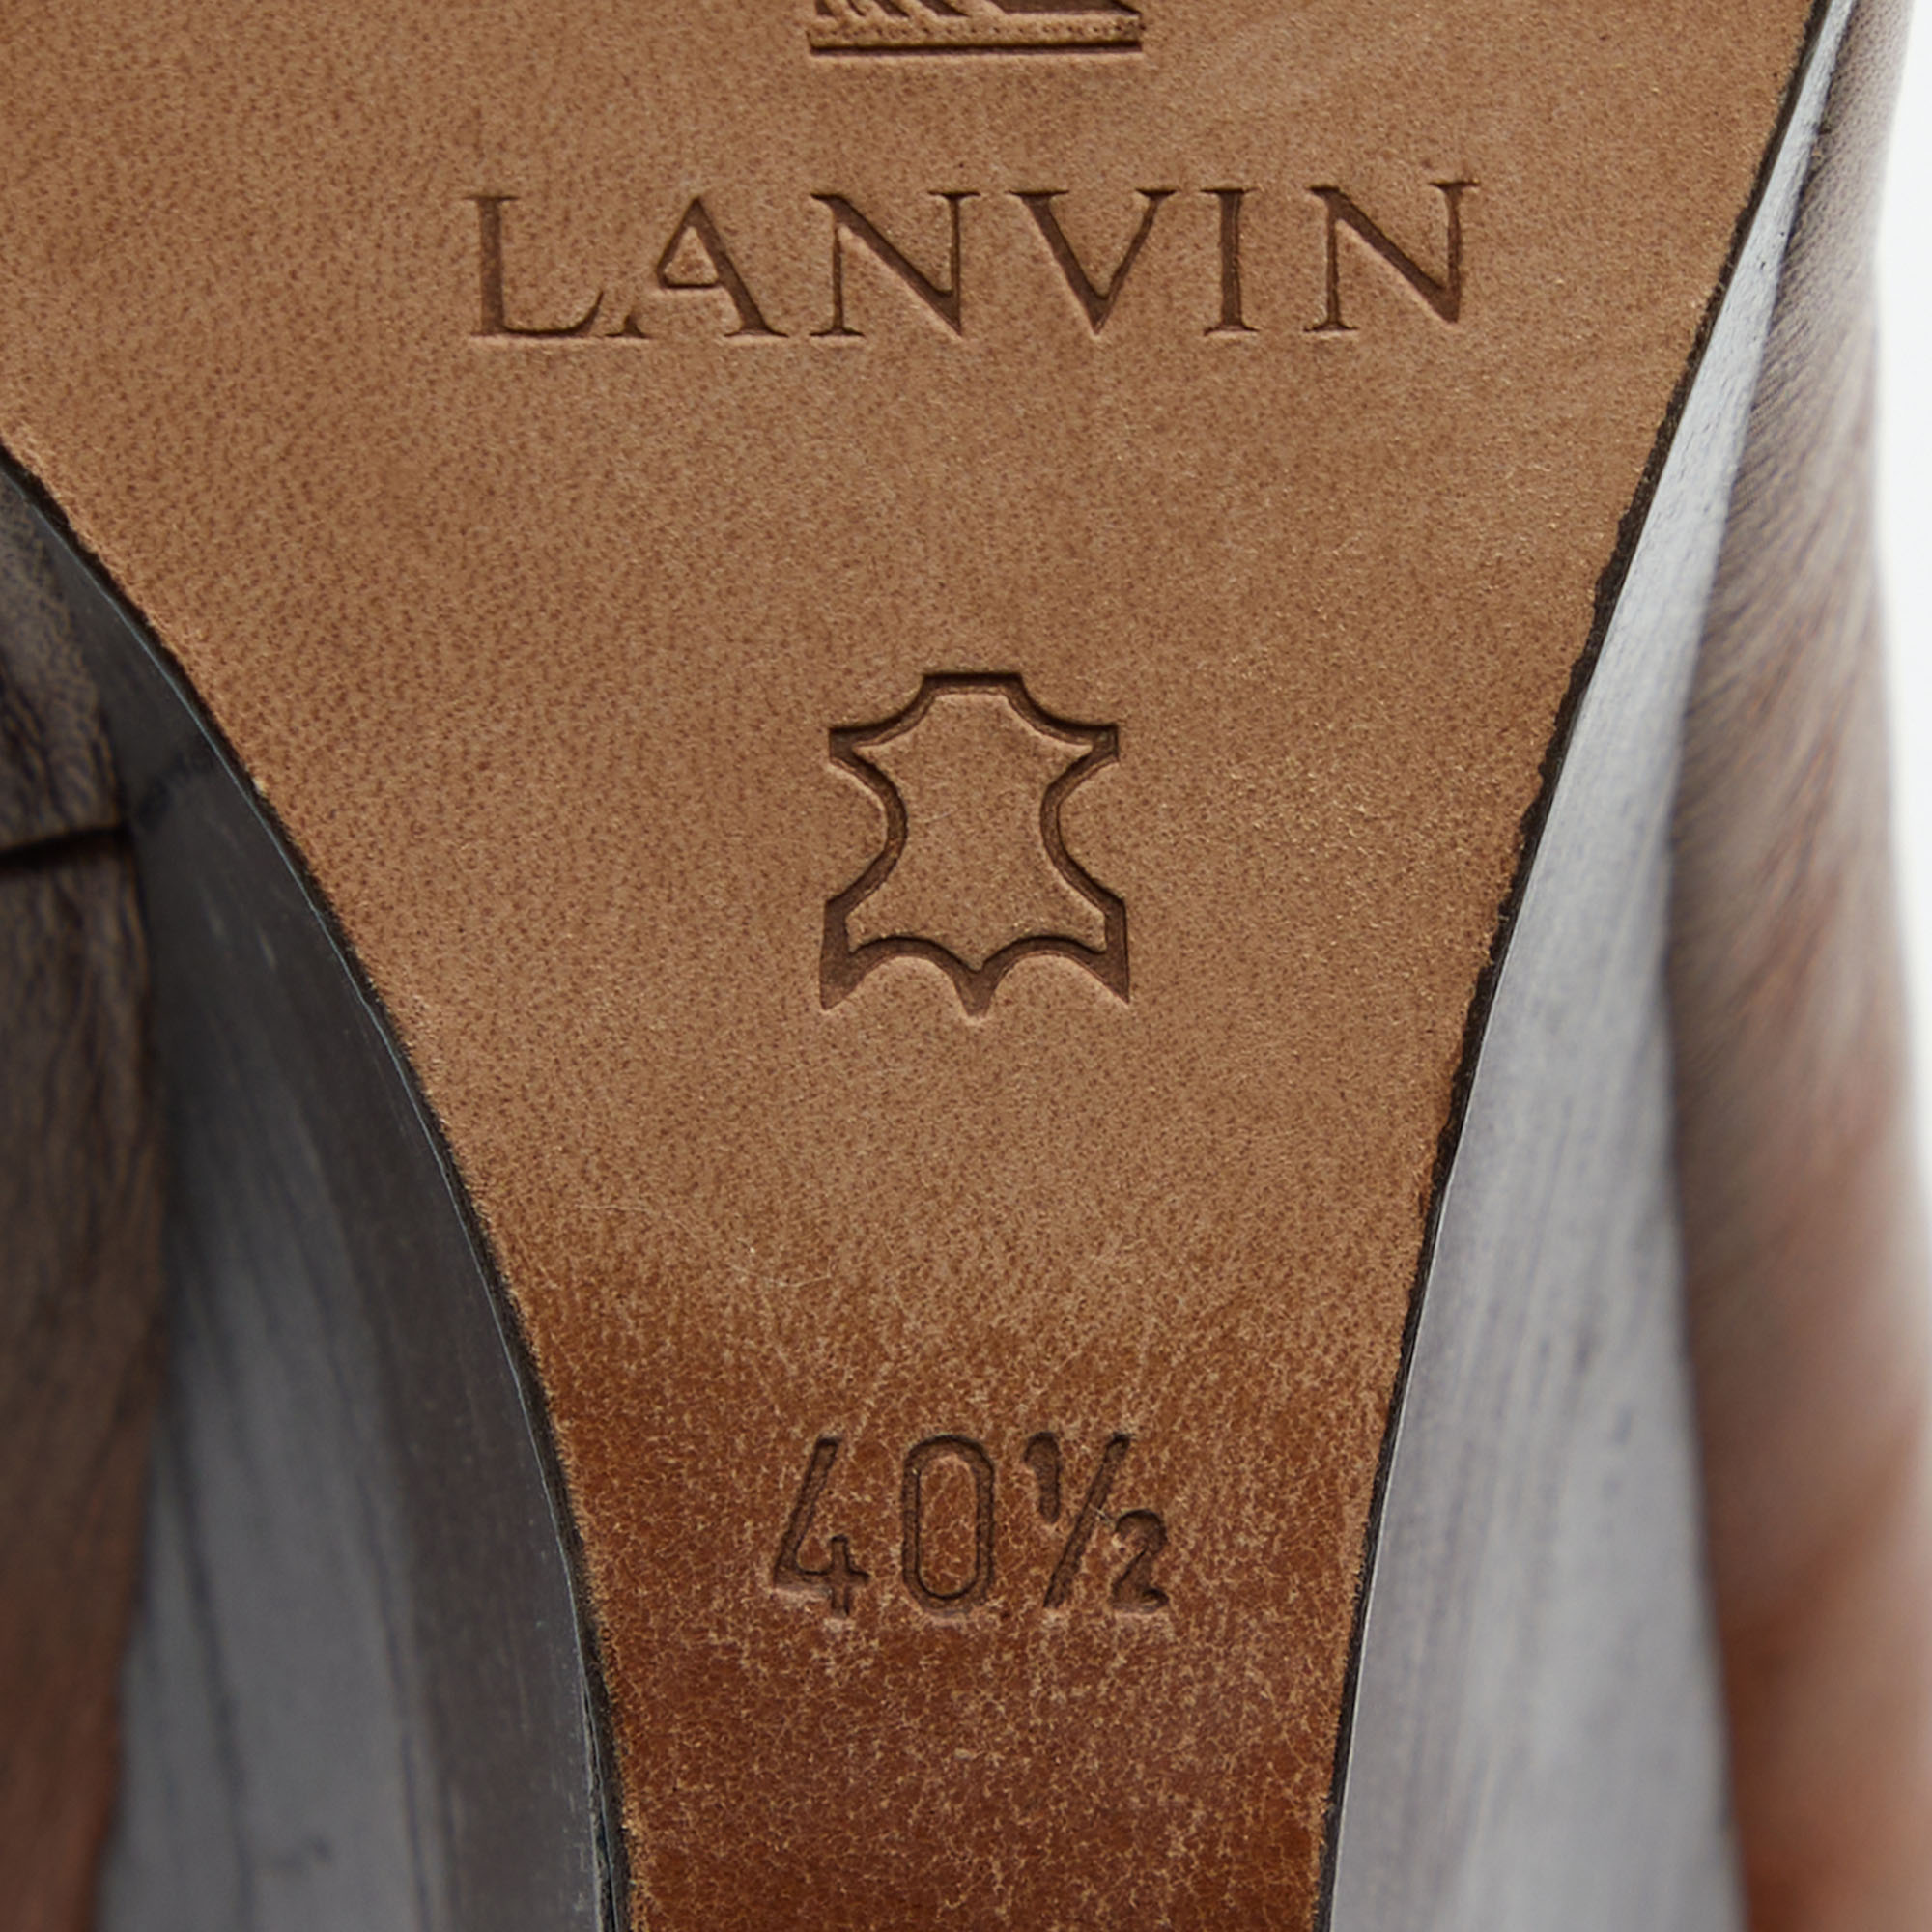 Lanvin Brown Leather Scrunch Wedge Pumps Size 40.5